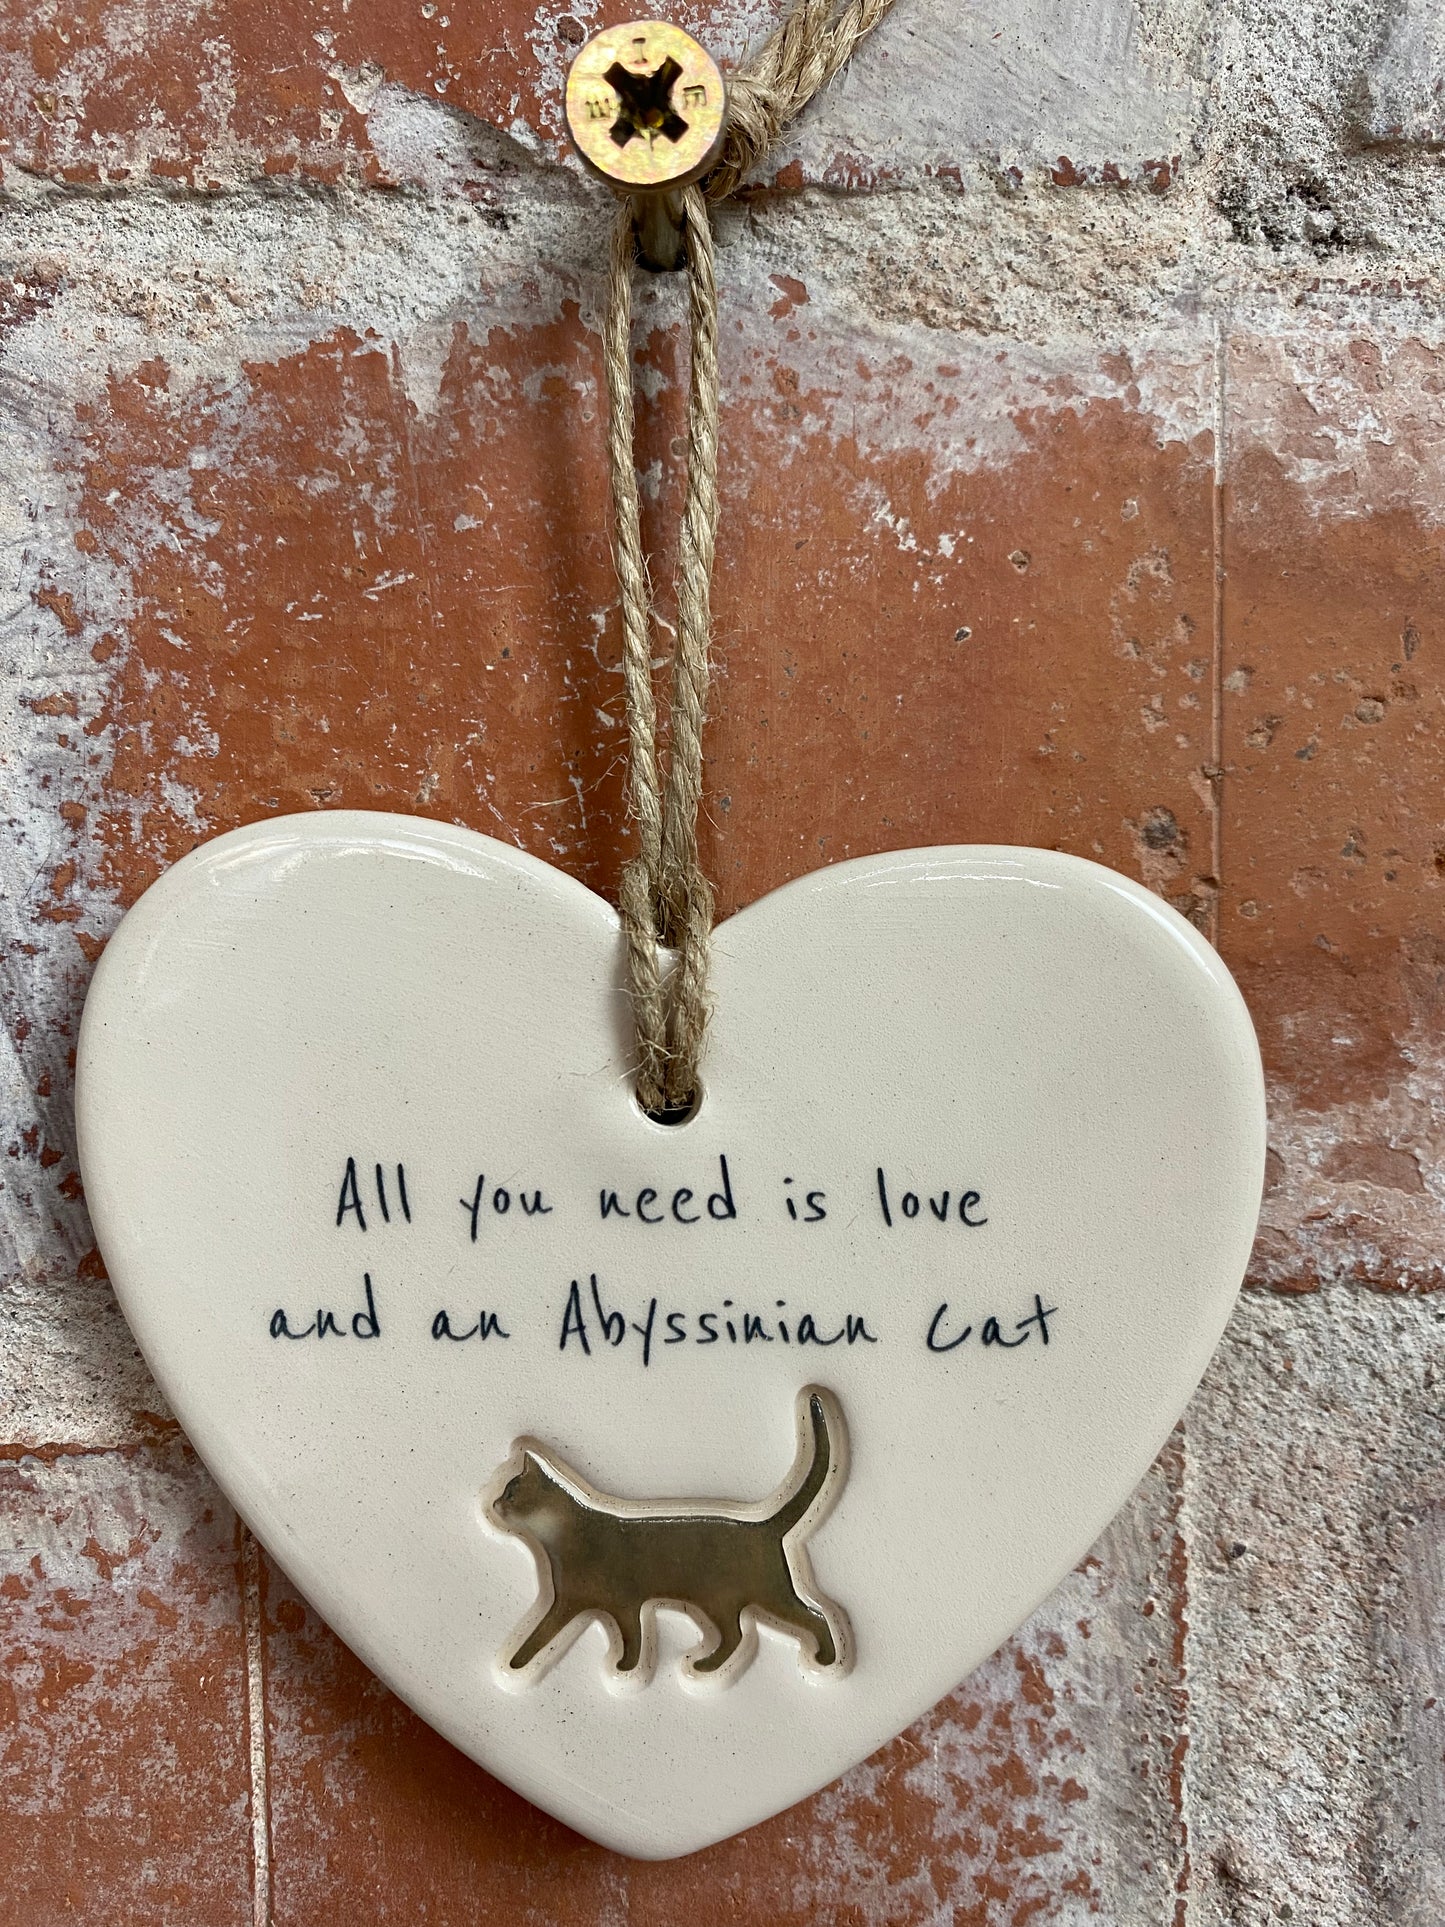 Abyssinian Cat ceramic heart